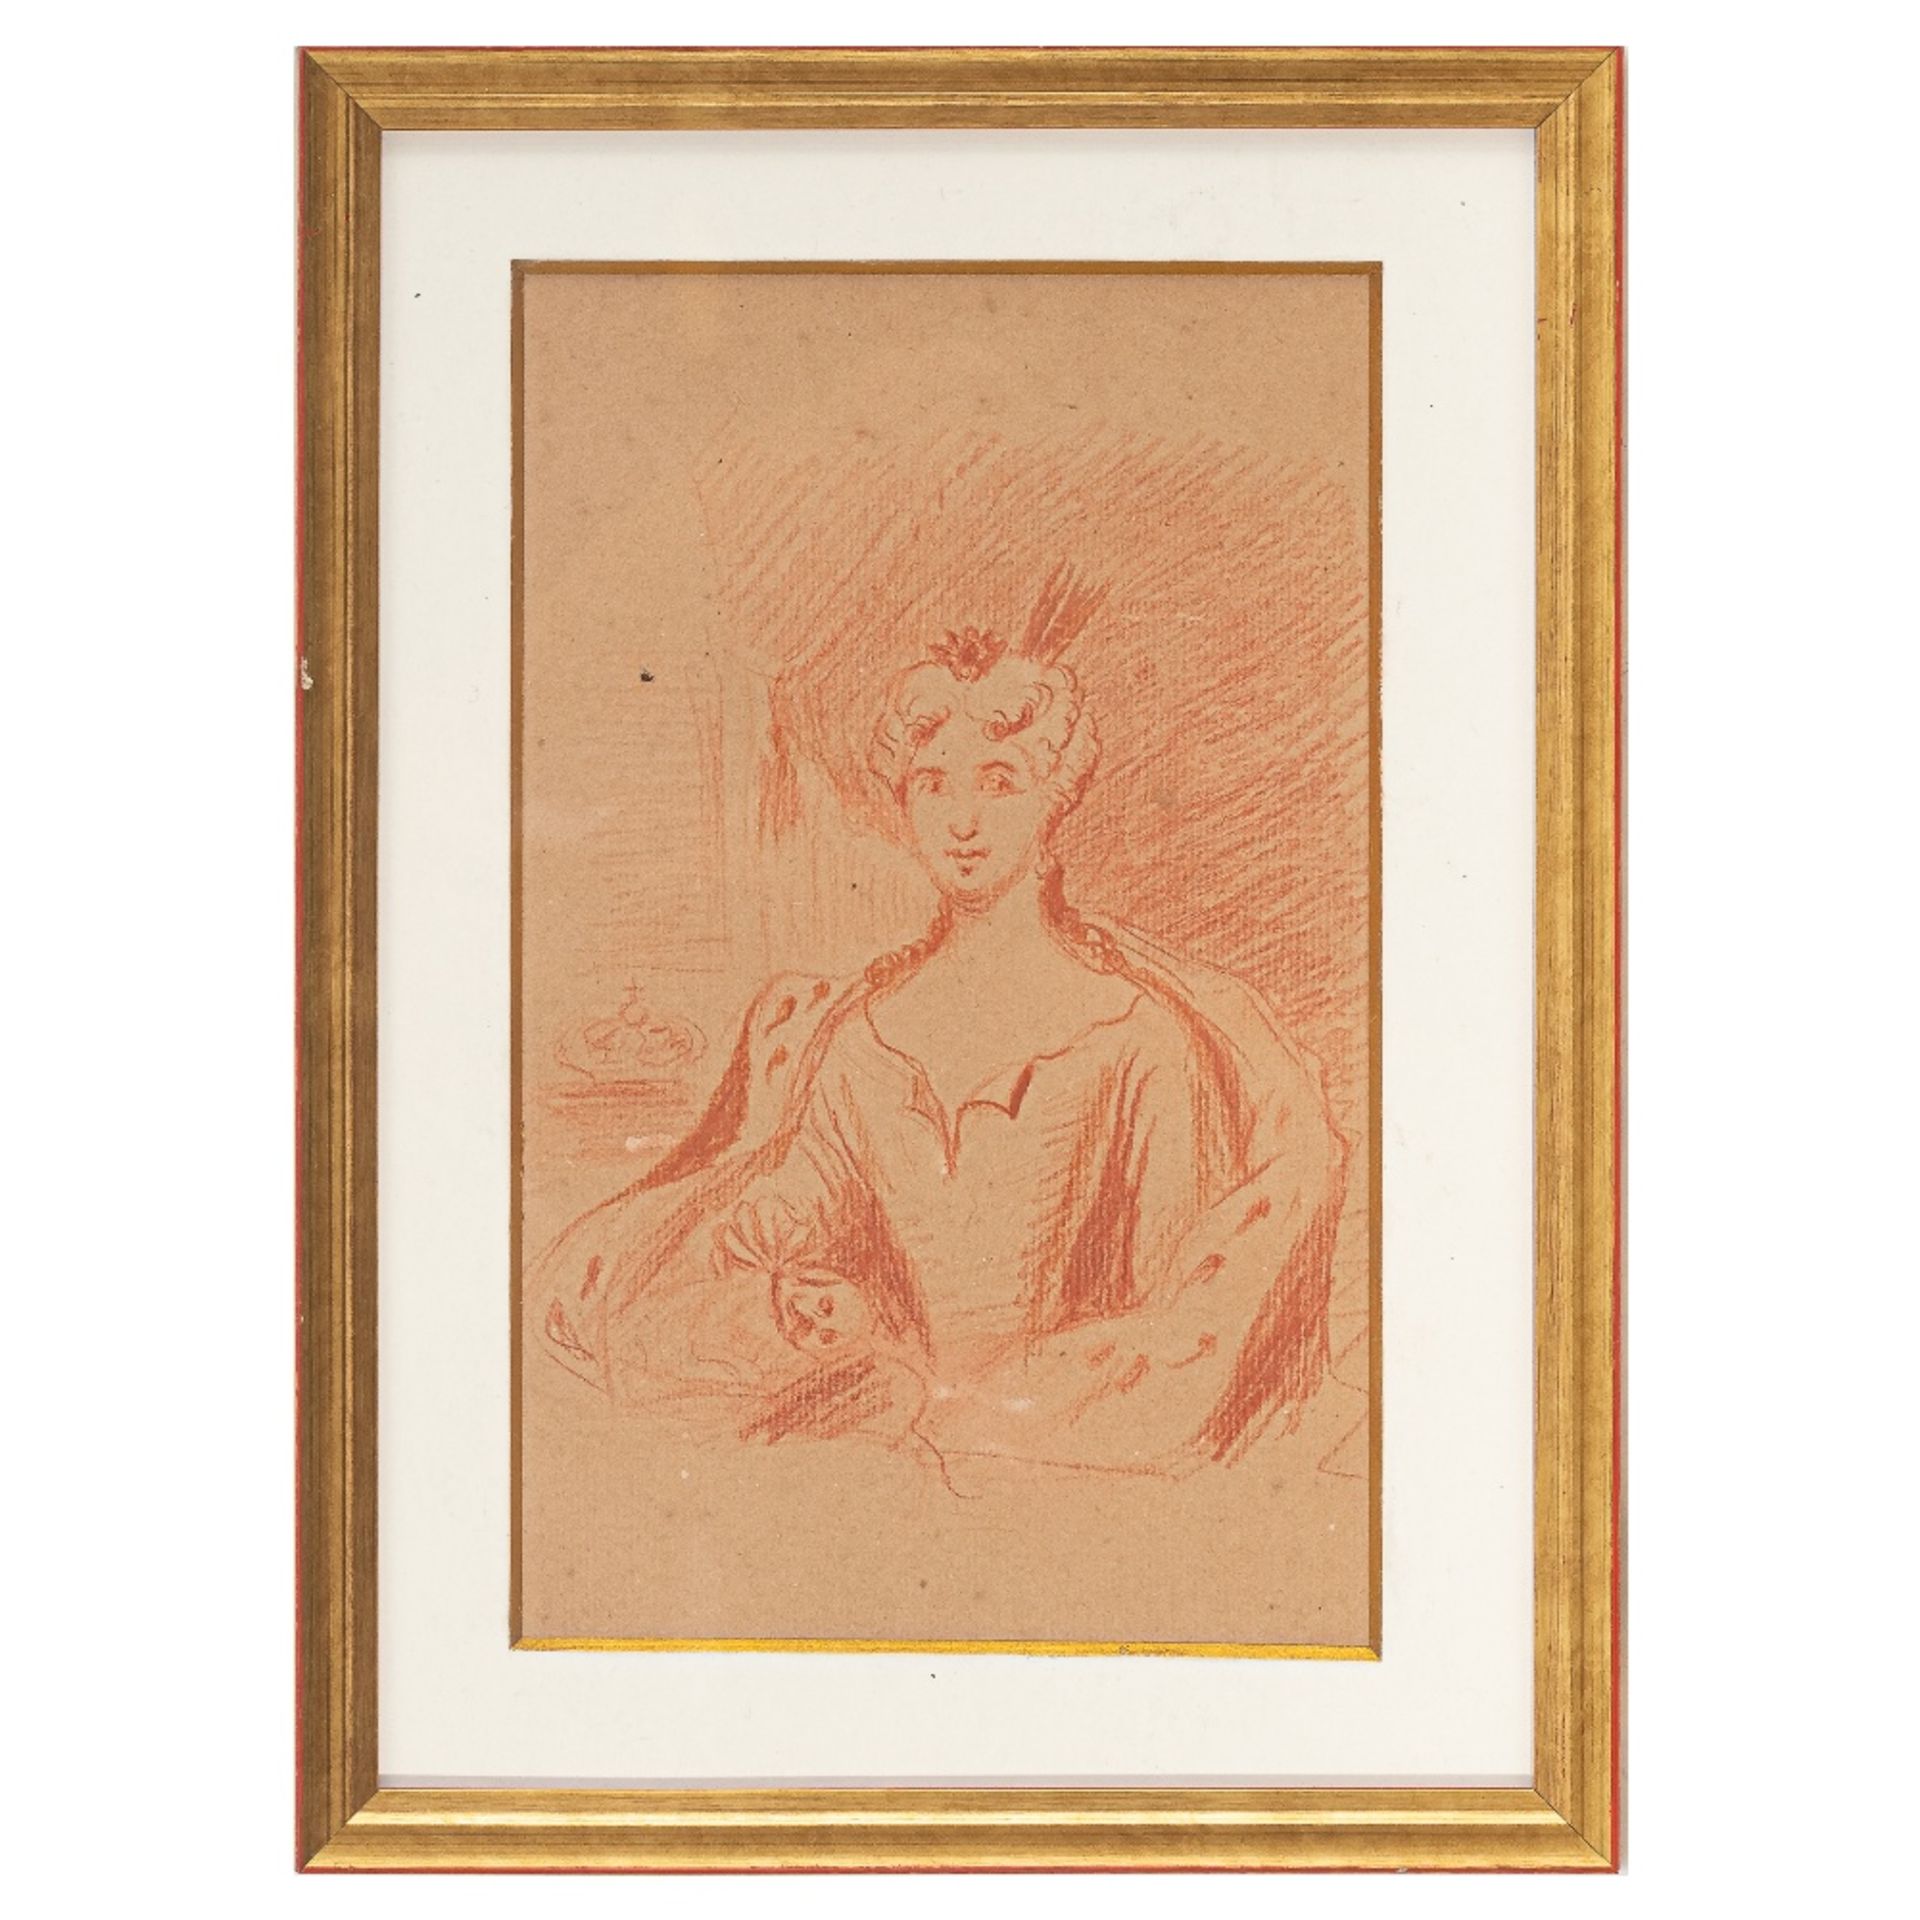 Escuela italiana, s.XIX. Seguidor de Giorgio Domenico Duprà. Retrato de la Reina Bárbara de Braganza